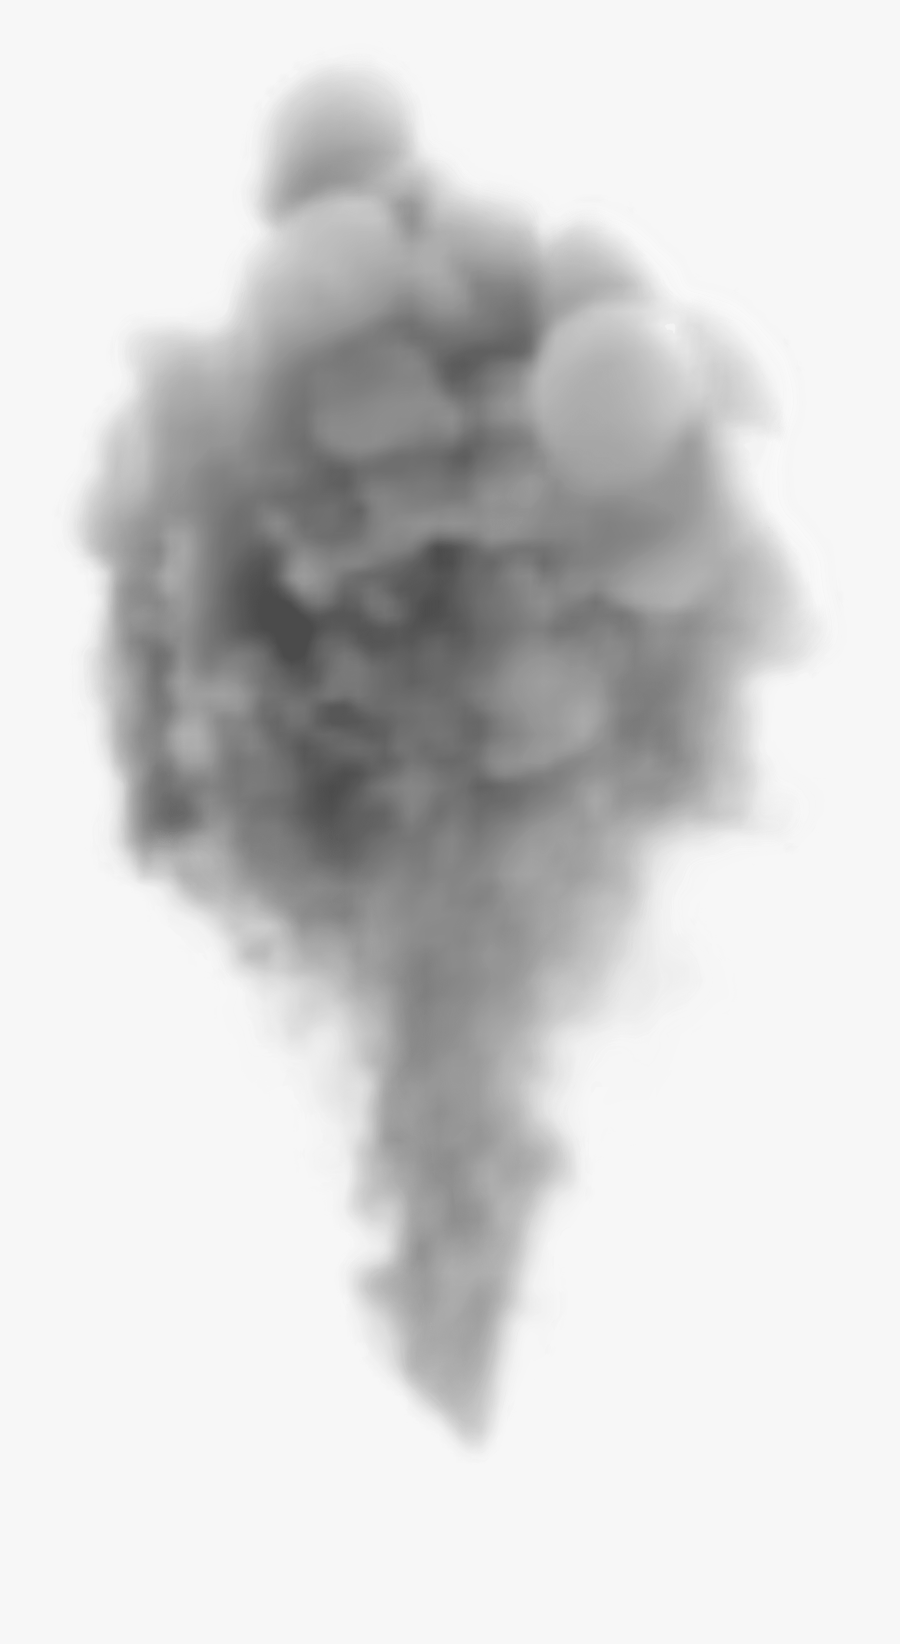 Large Smoke Png Clipart Image - Transparent Background Smoke Clipart, Transparent Clipart